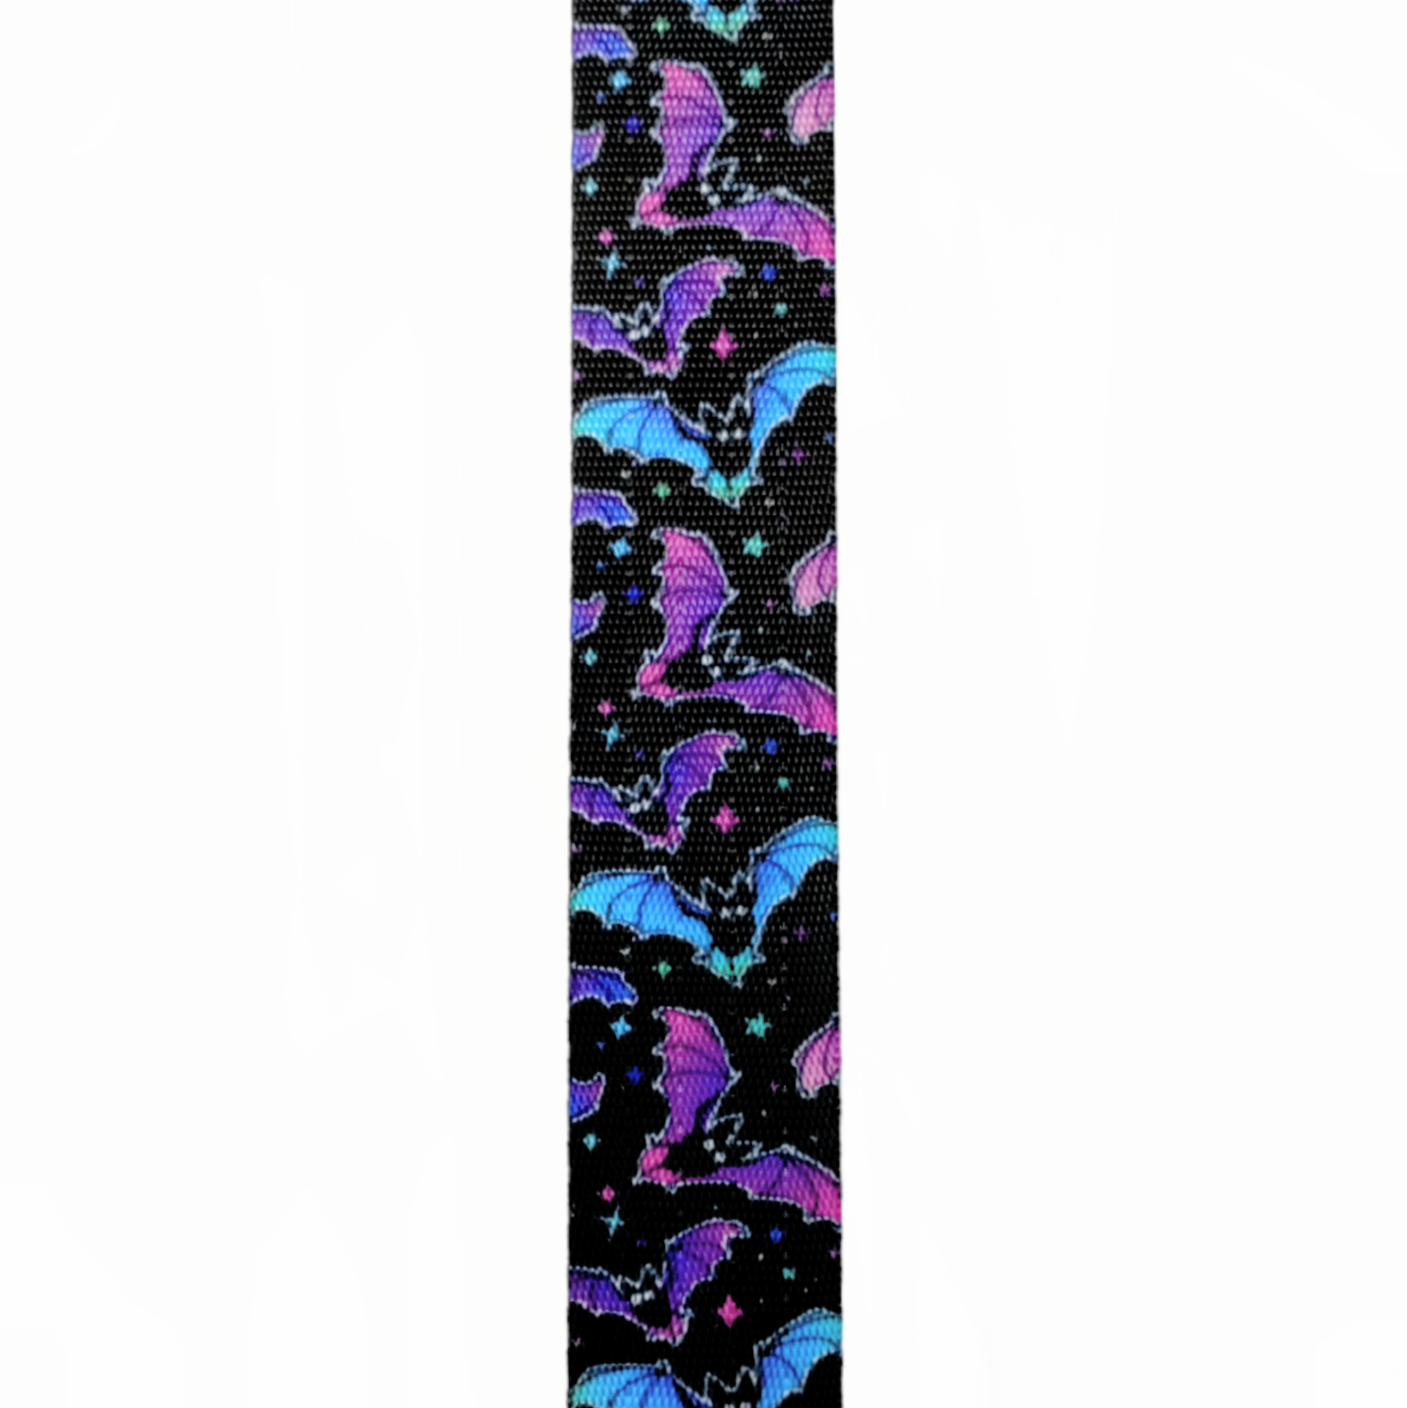 Jewel-Tone Bats Webbing - in 2 sizes, sold by the meter Atelier Fiber Arts